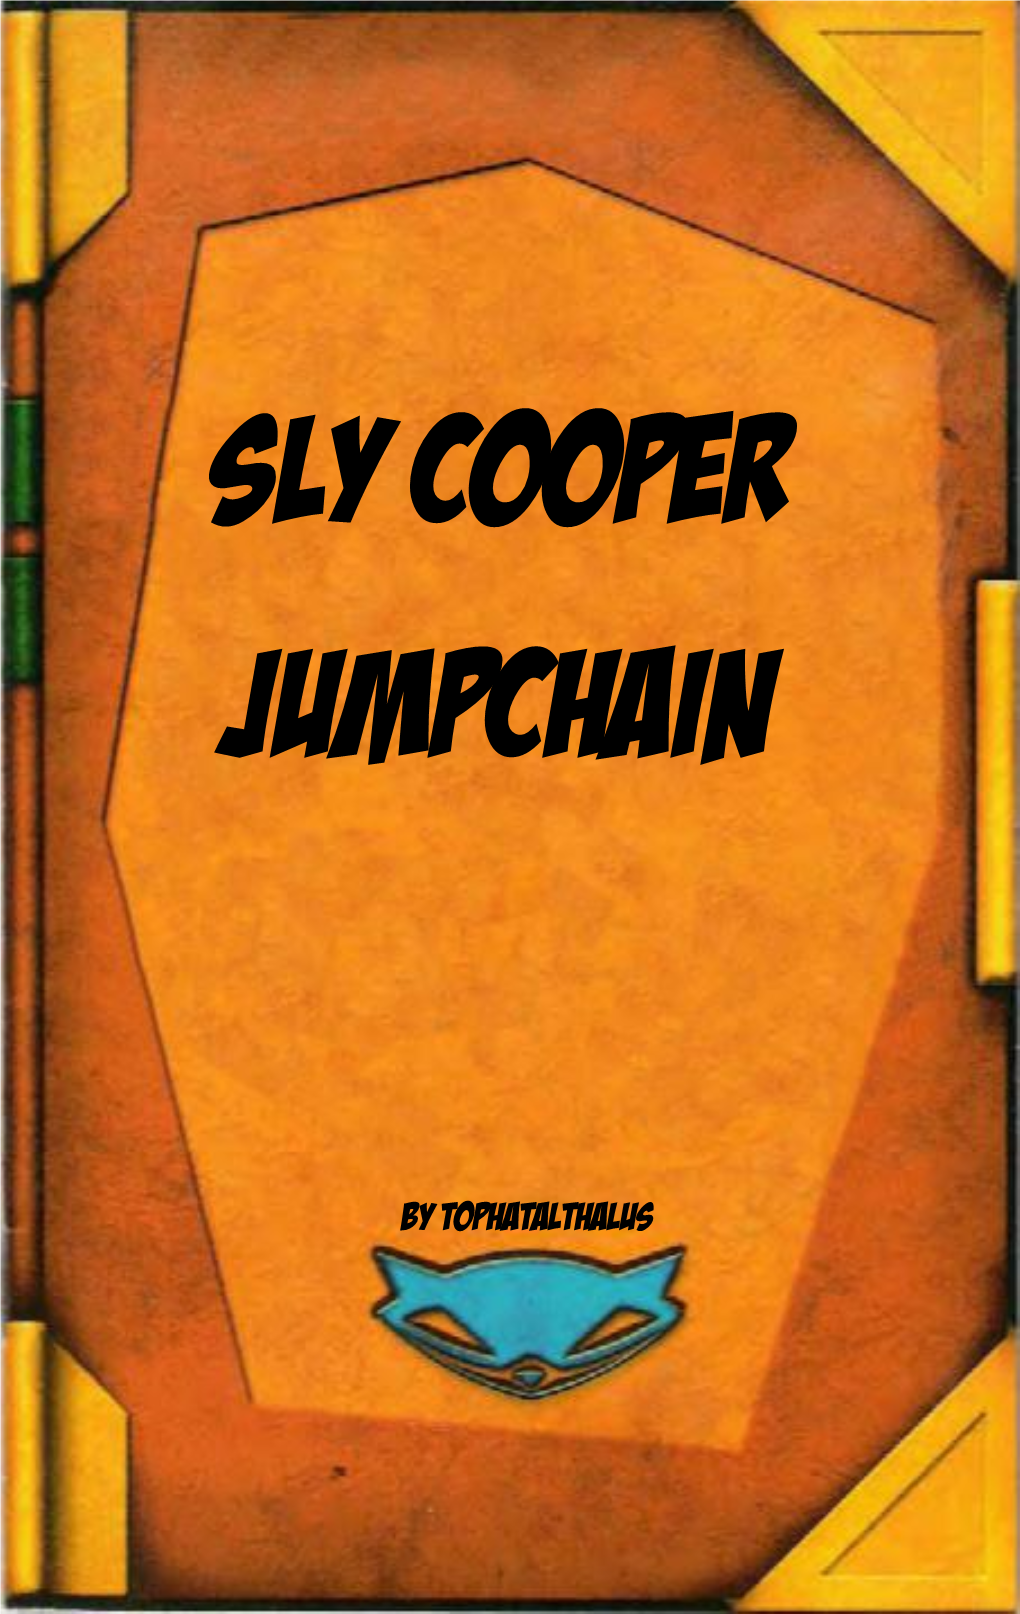 Sly Cooper Jumpchain